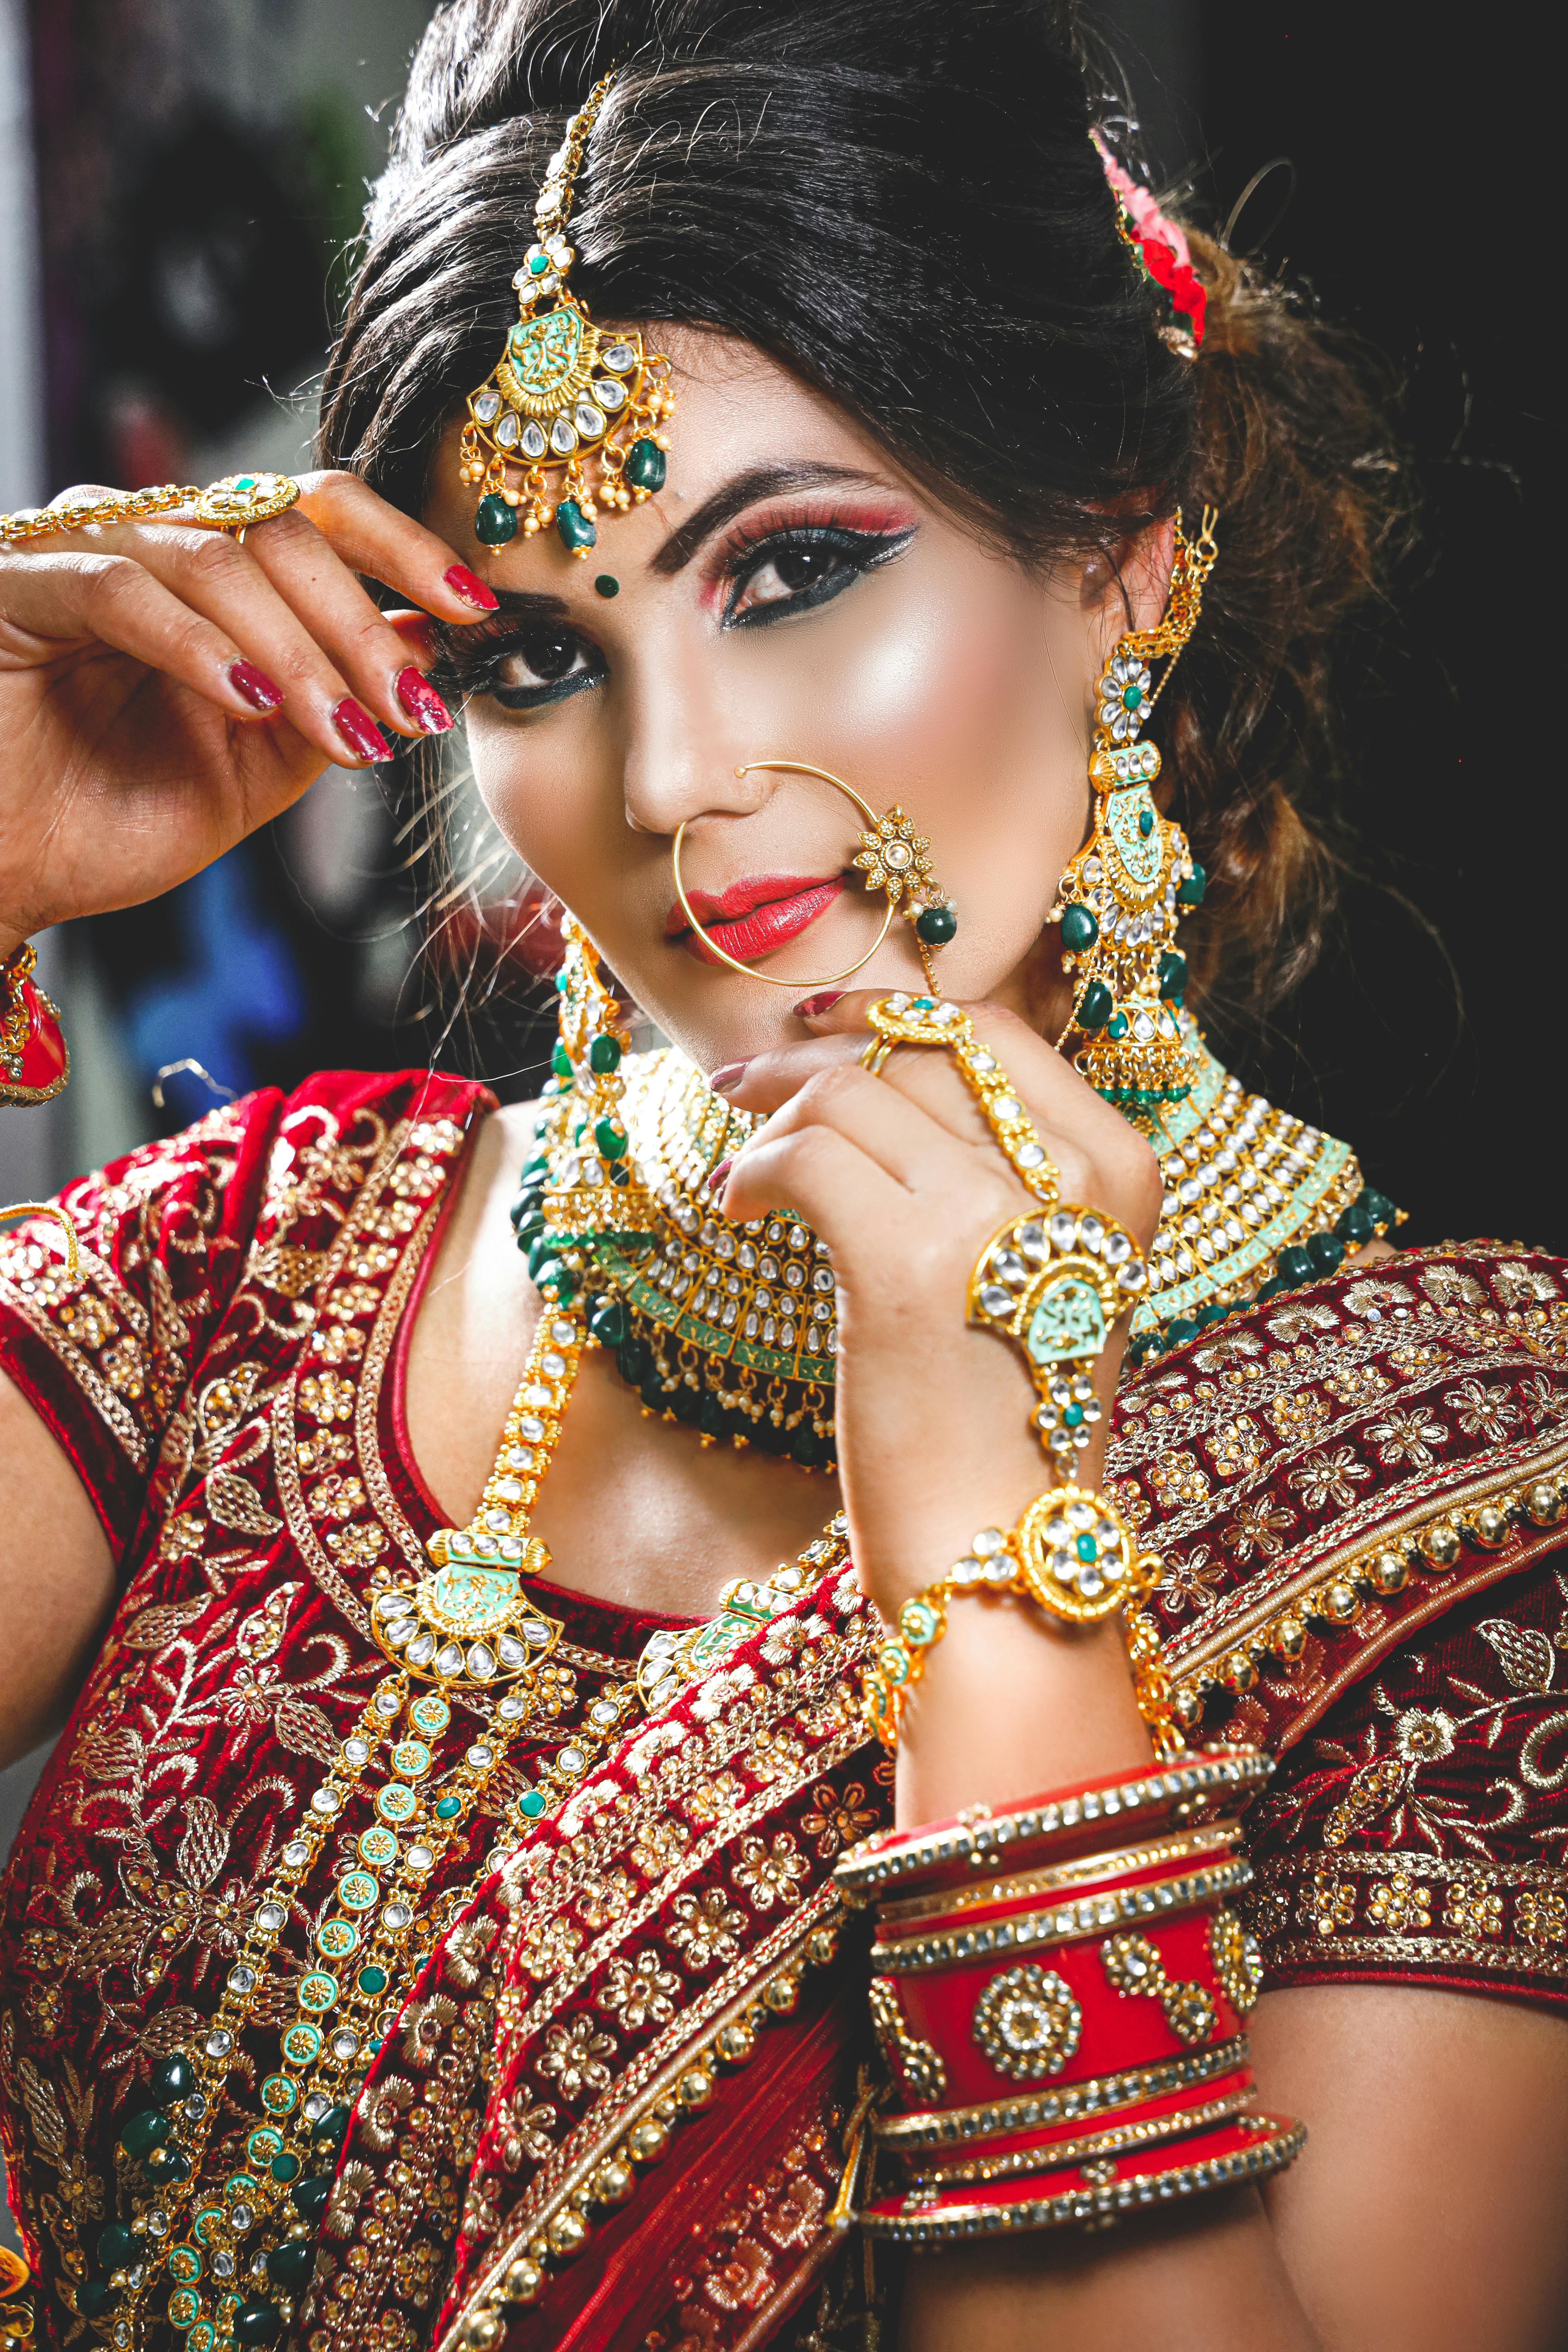 Unique Wedding + Engagement Photography | Indian wedding photography poses,  Indian bride photography poses, Indian wedding photography couples